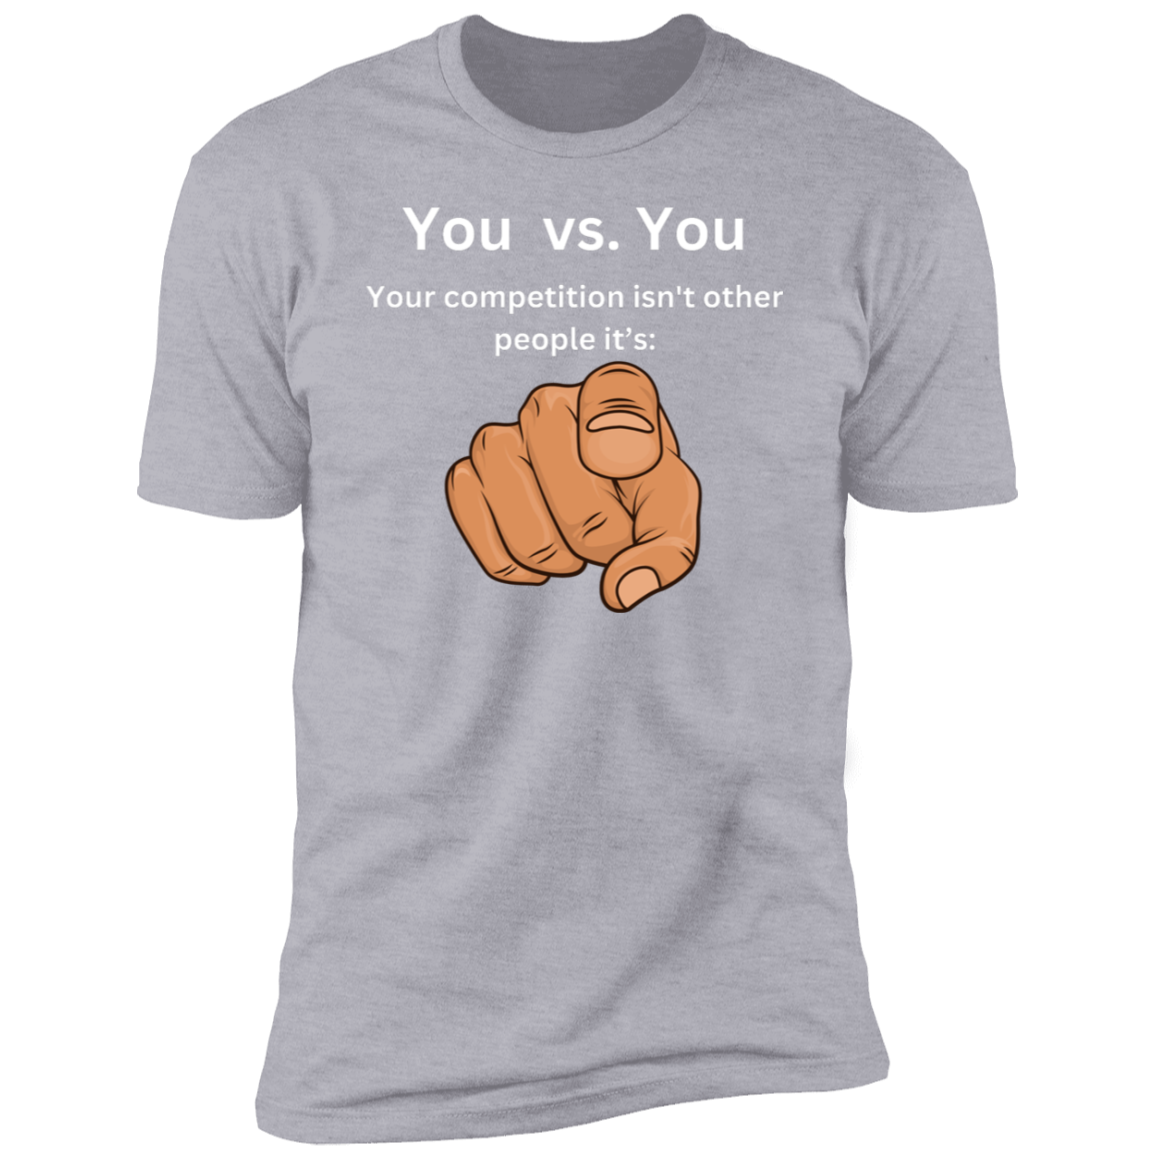 You vs You Premium Short Sleeve T-Shirt